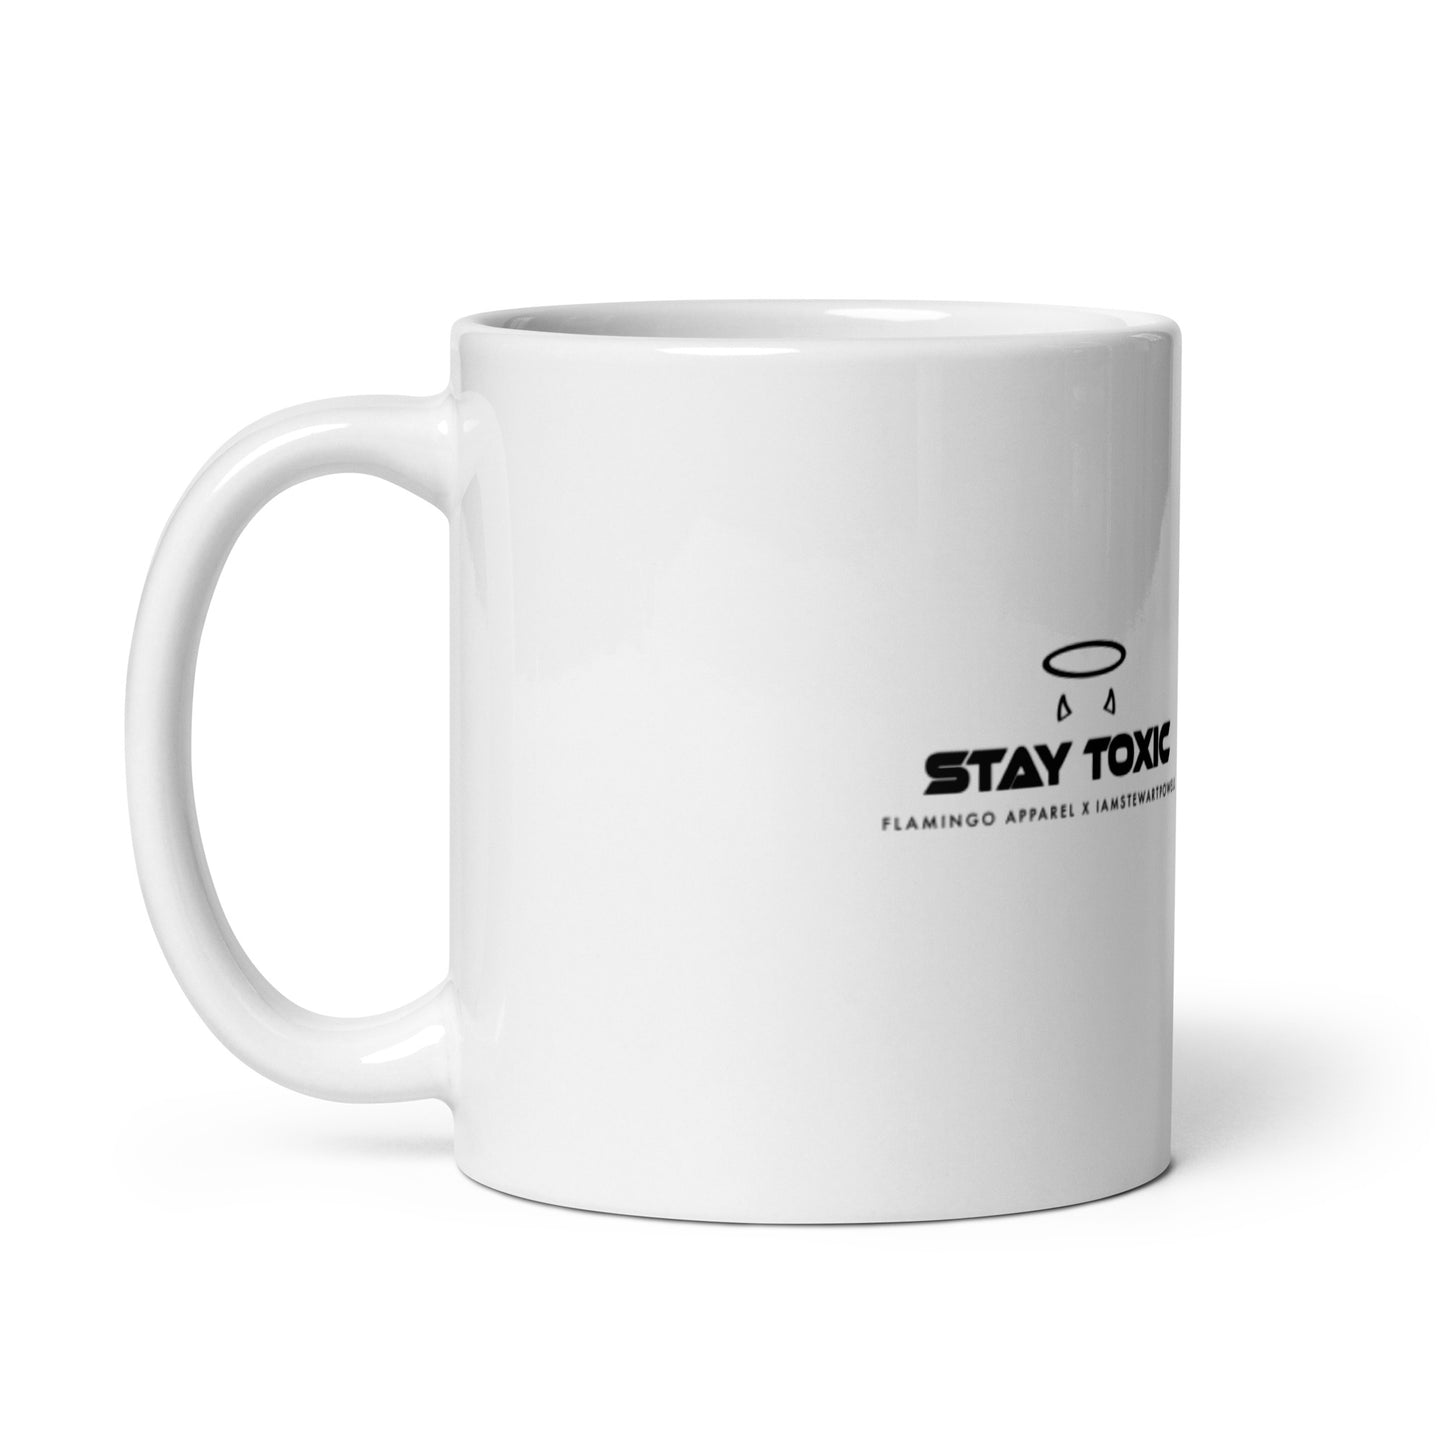 Stay Toxic - White Glossy Coffee Mug